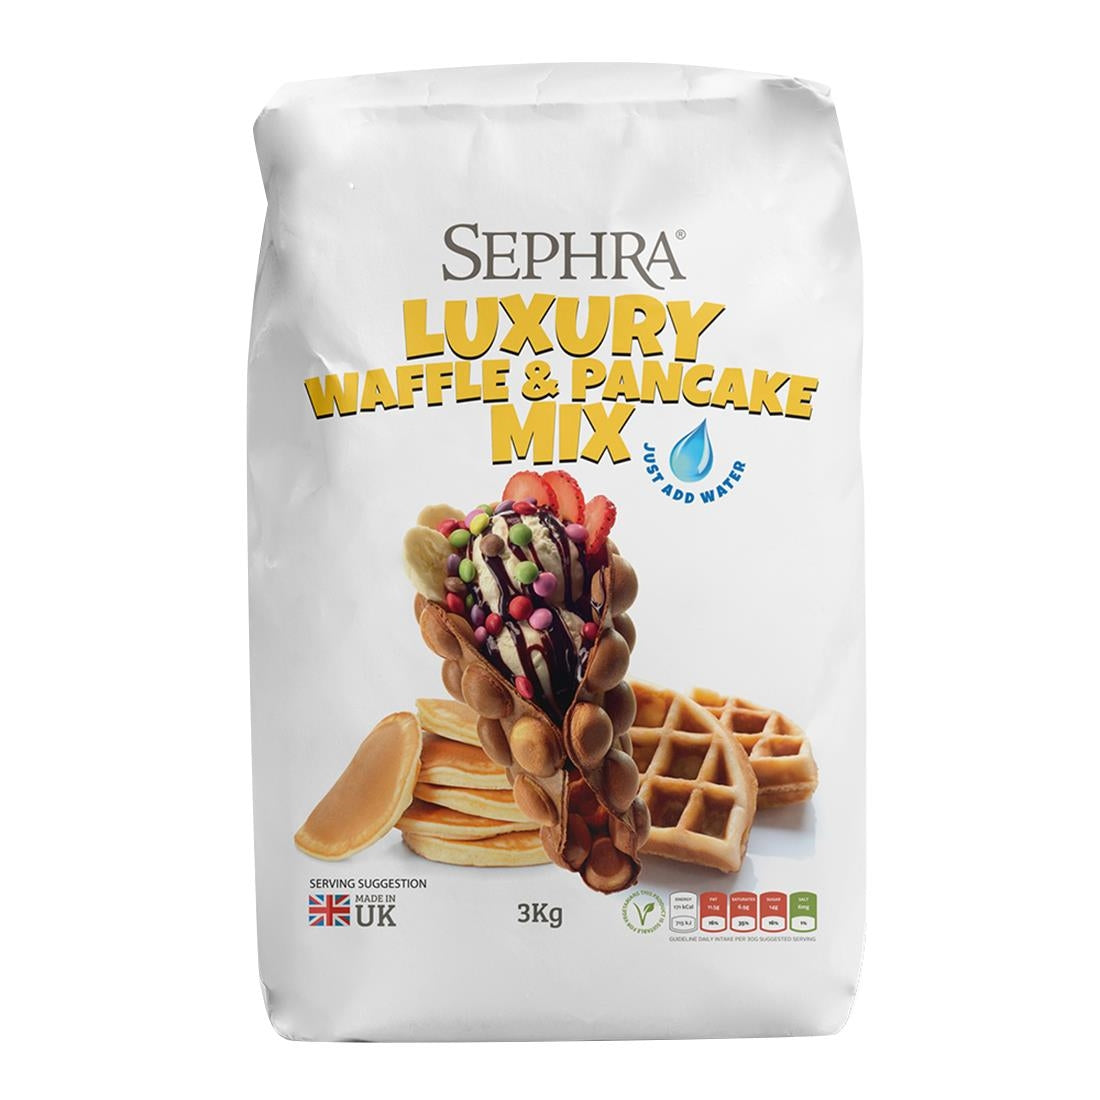 HU128 Sephra Waffle and Pancake Mix 3kg (Pack of 4)